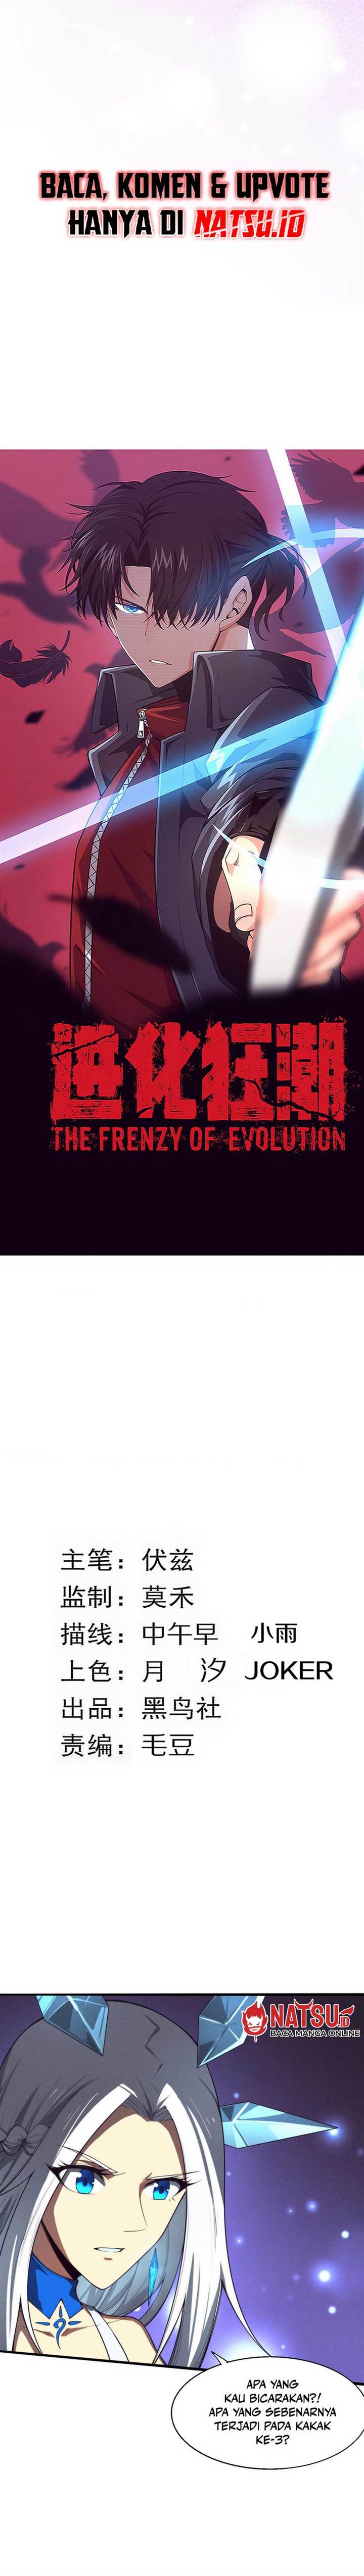 Evolution Frenzy Chapter 128